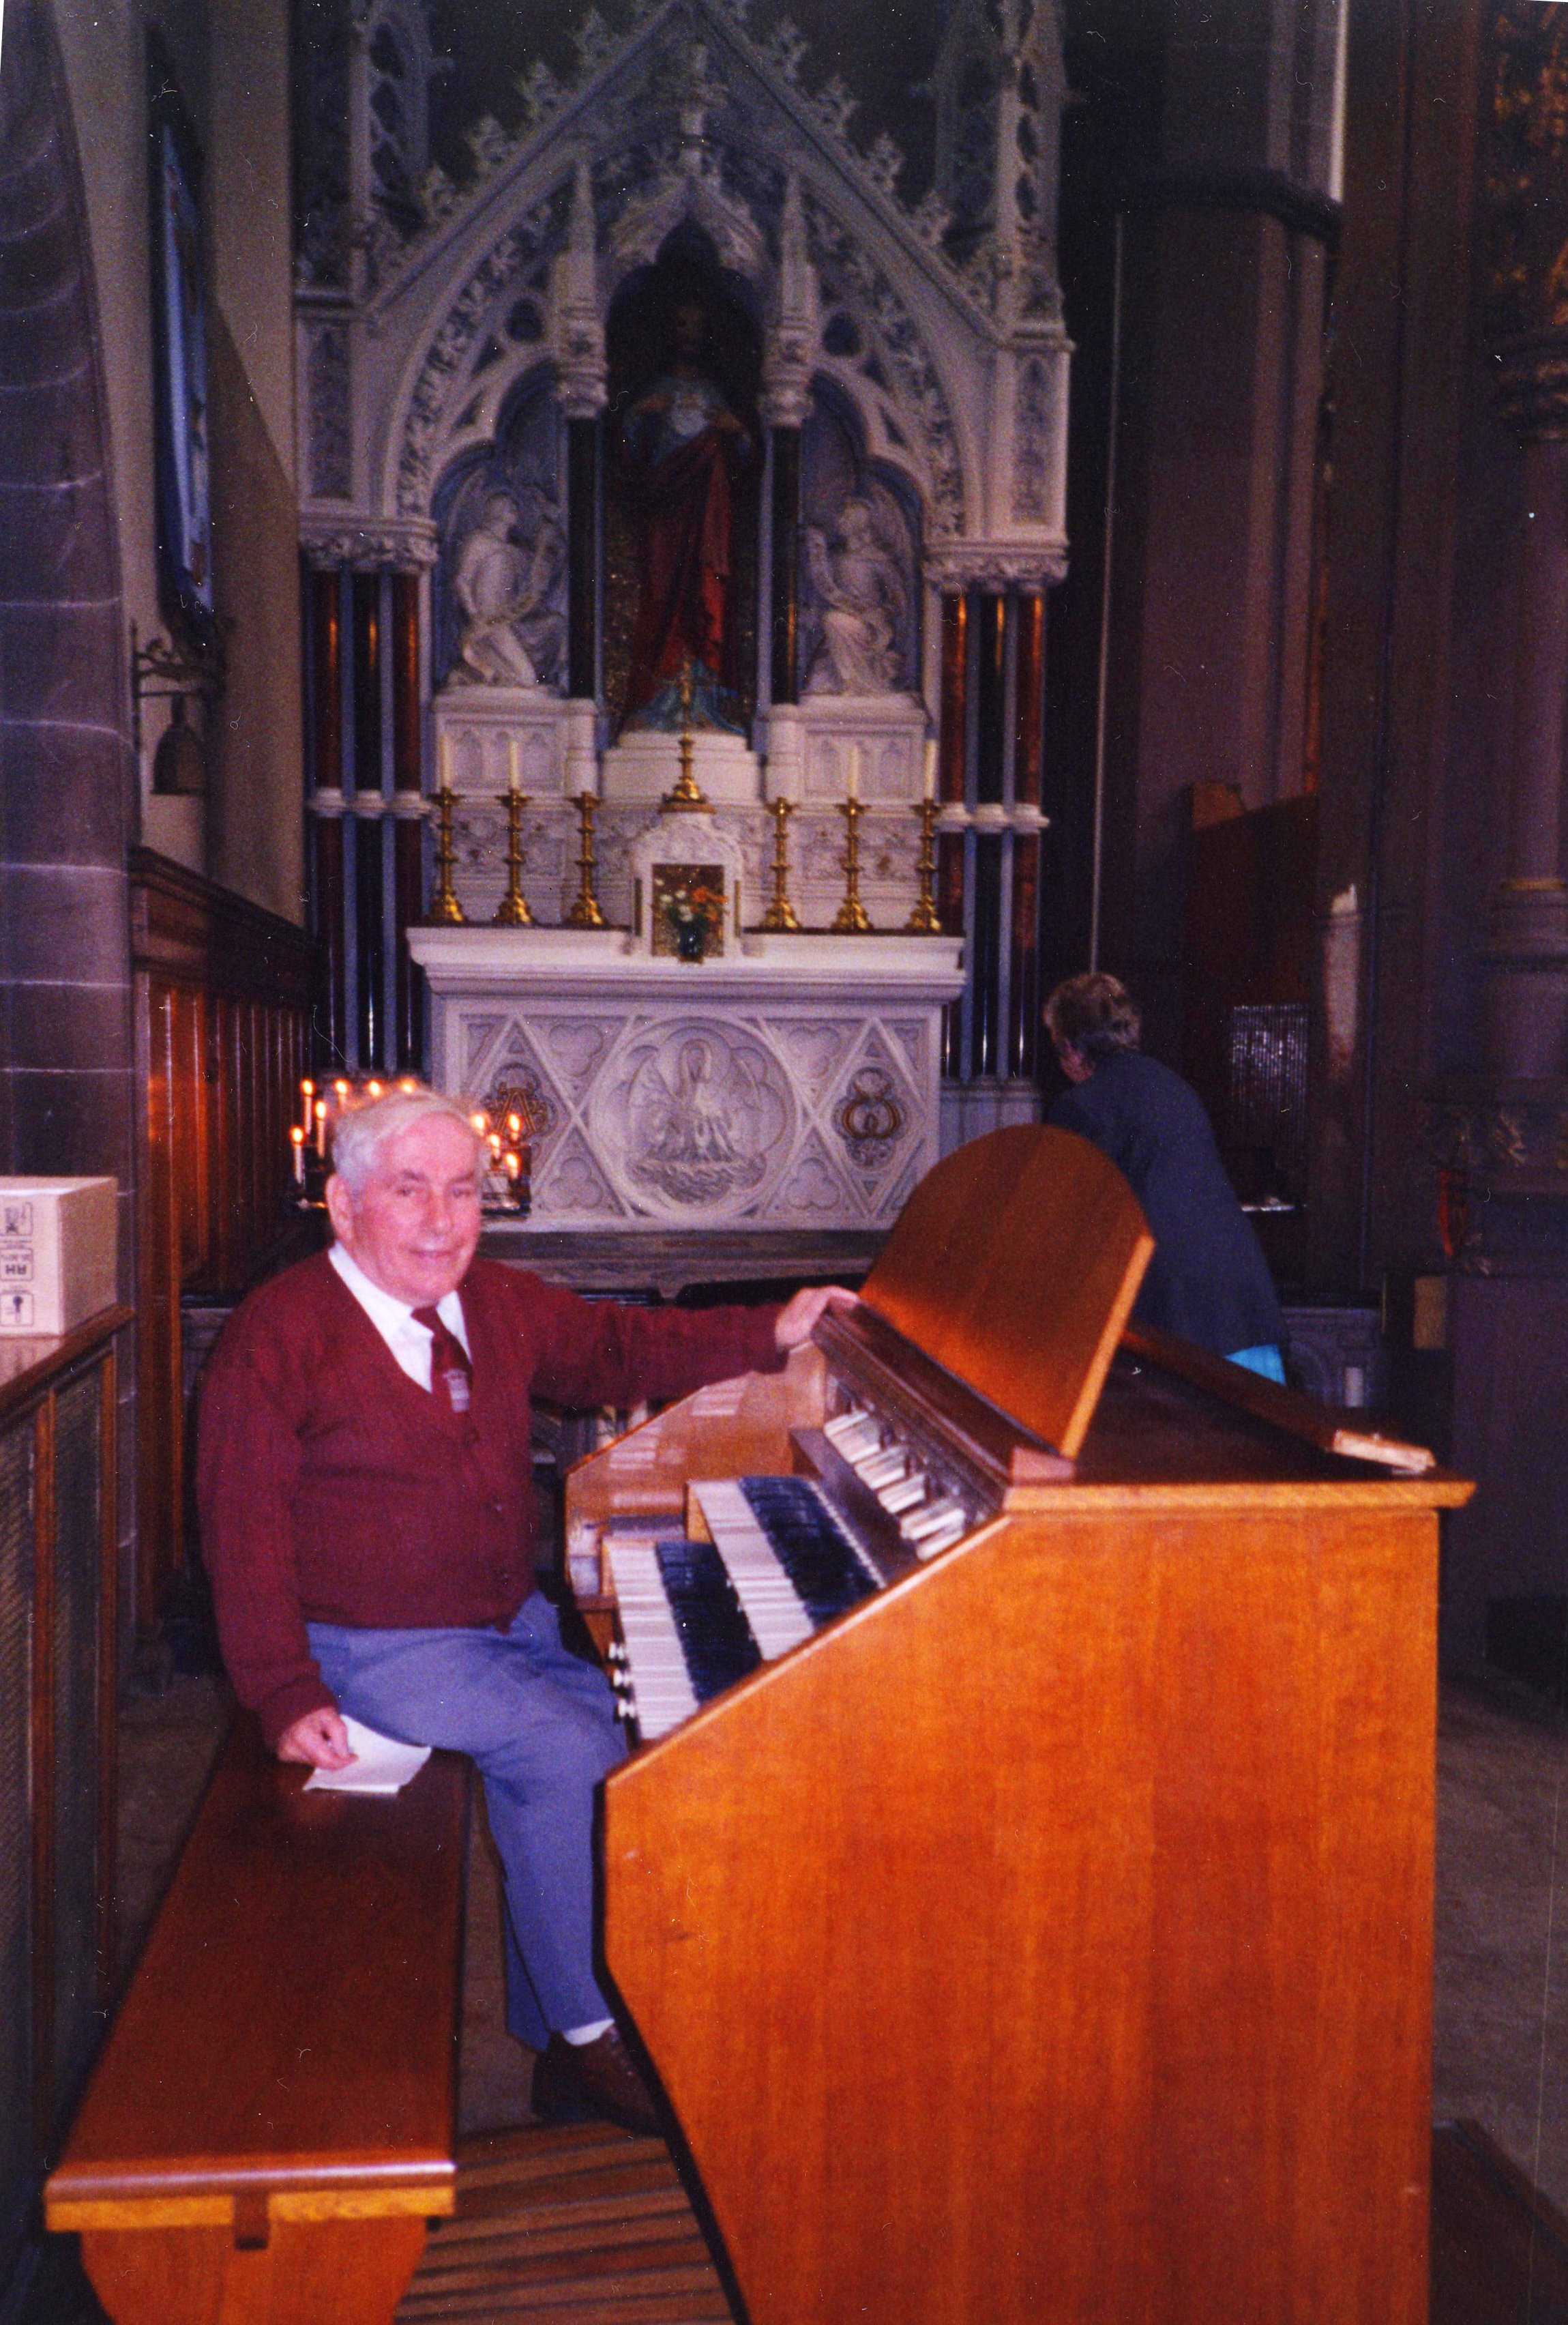 Old organ console